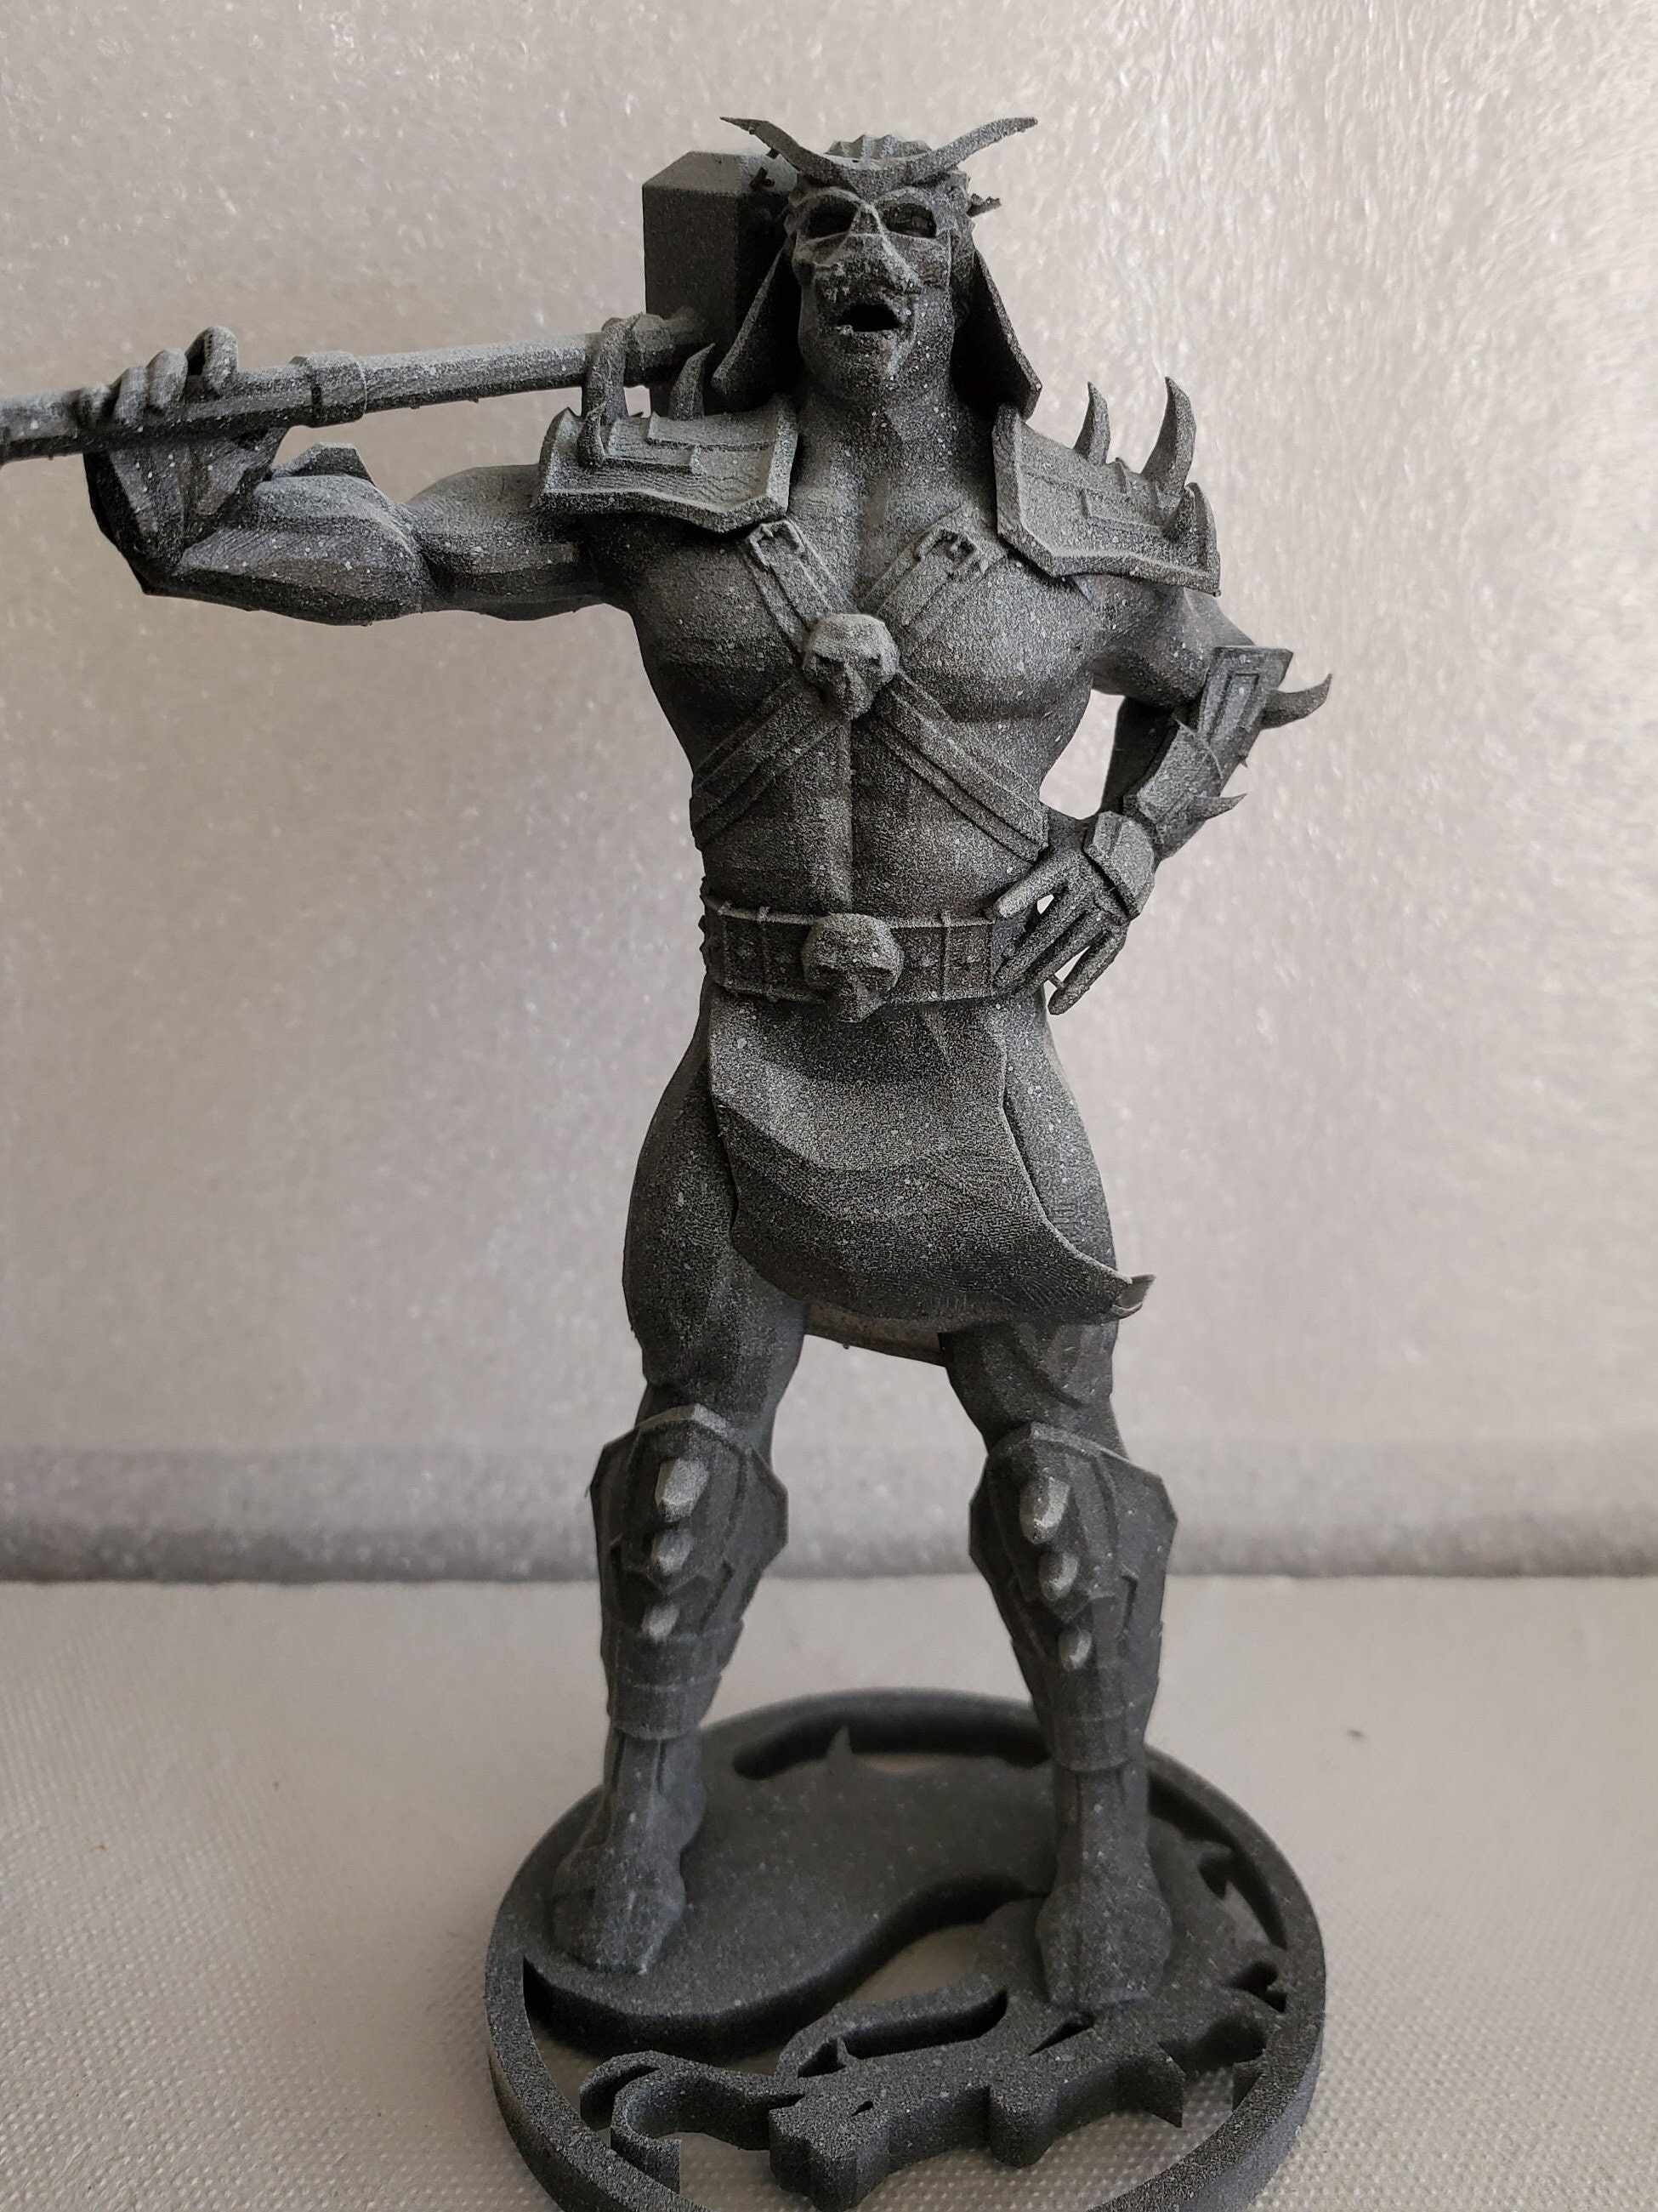 Paper-Rock papercraft - Martillo de Shao Kahn en Mortal Kombat. Medida: 60  cm ideal para cosplay  seccion  de modelos con dificultad media